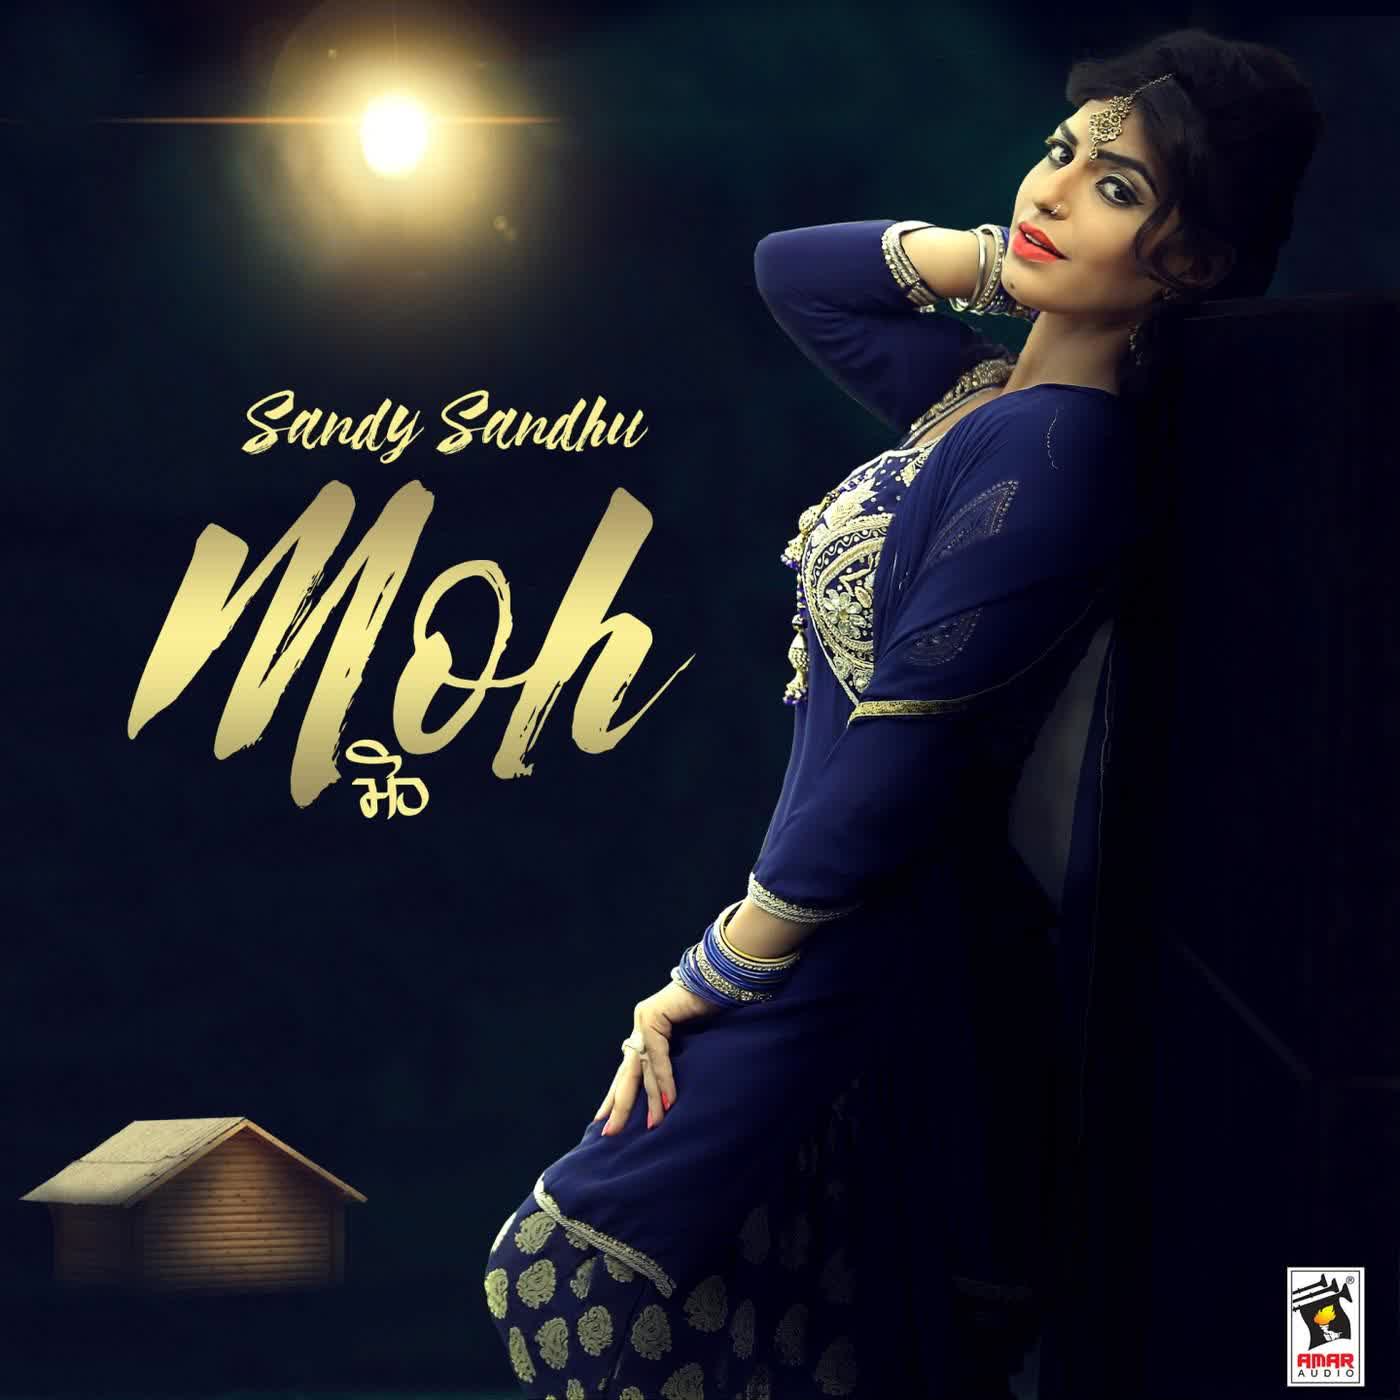 Moh Sandy Sandhu Mp3 song download